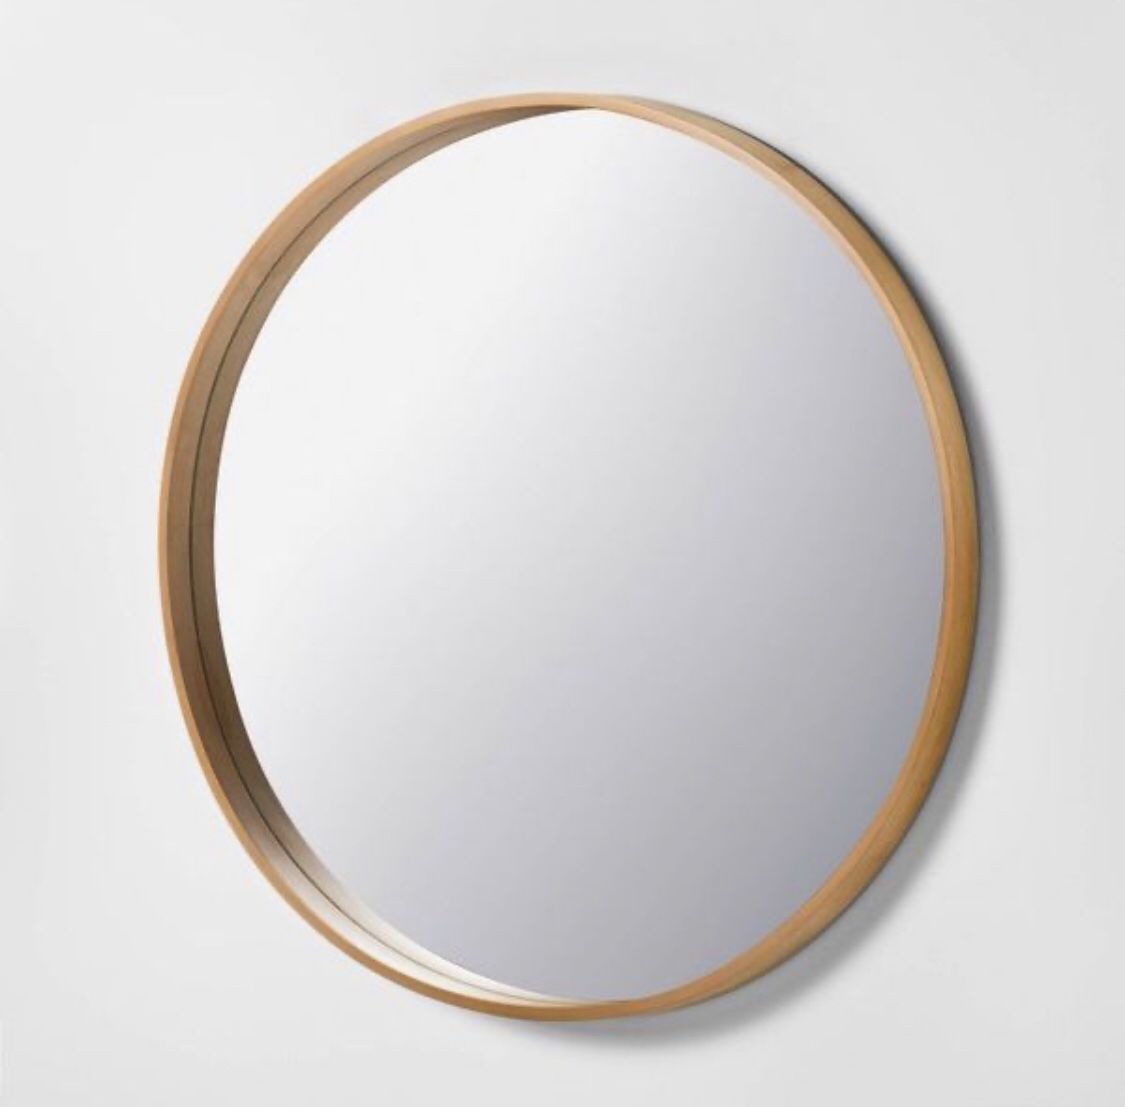 Large Round Mirror - Brand New!